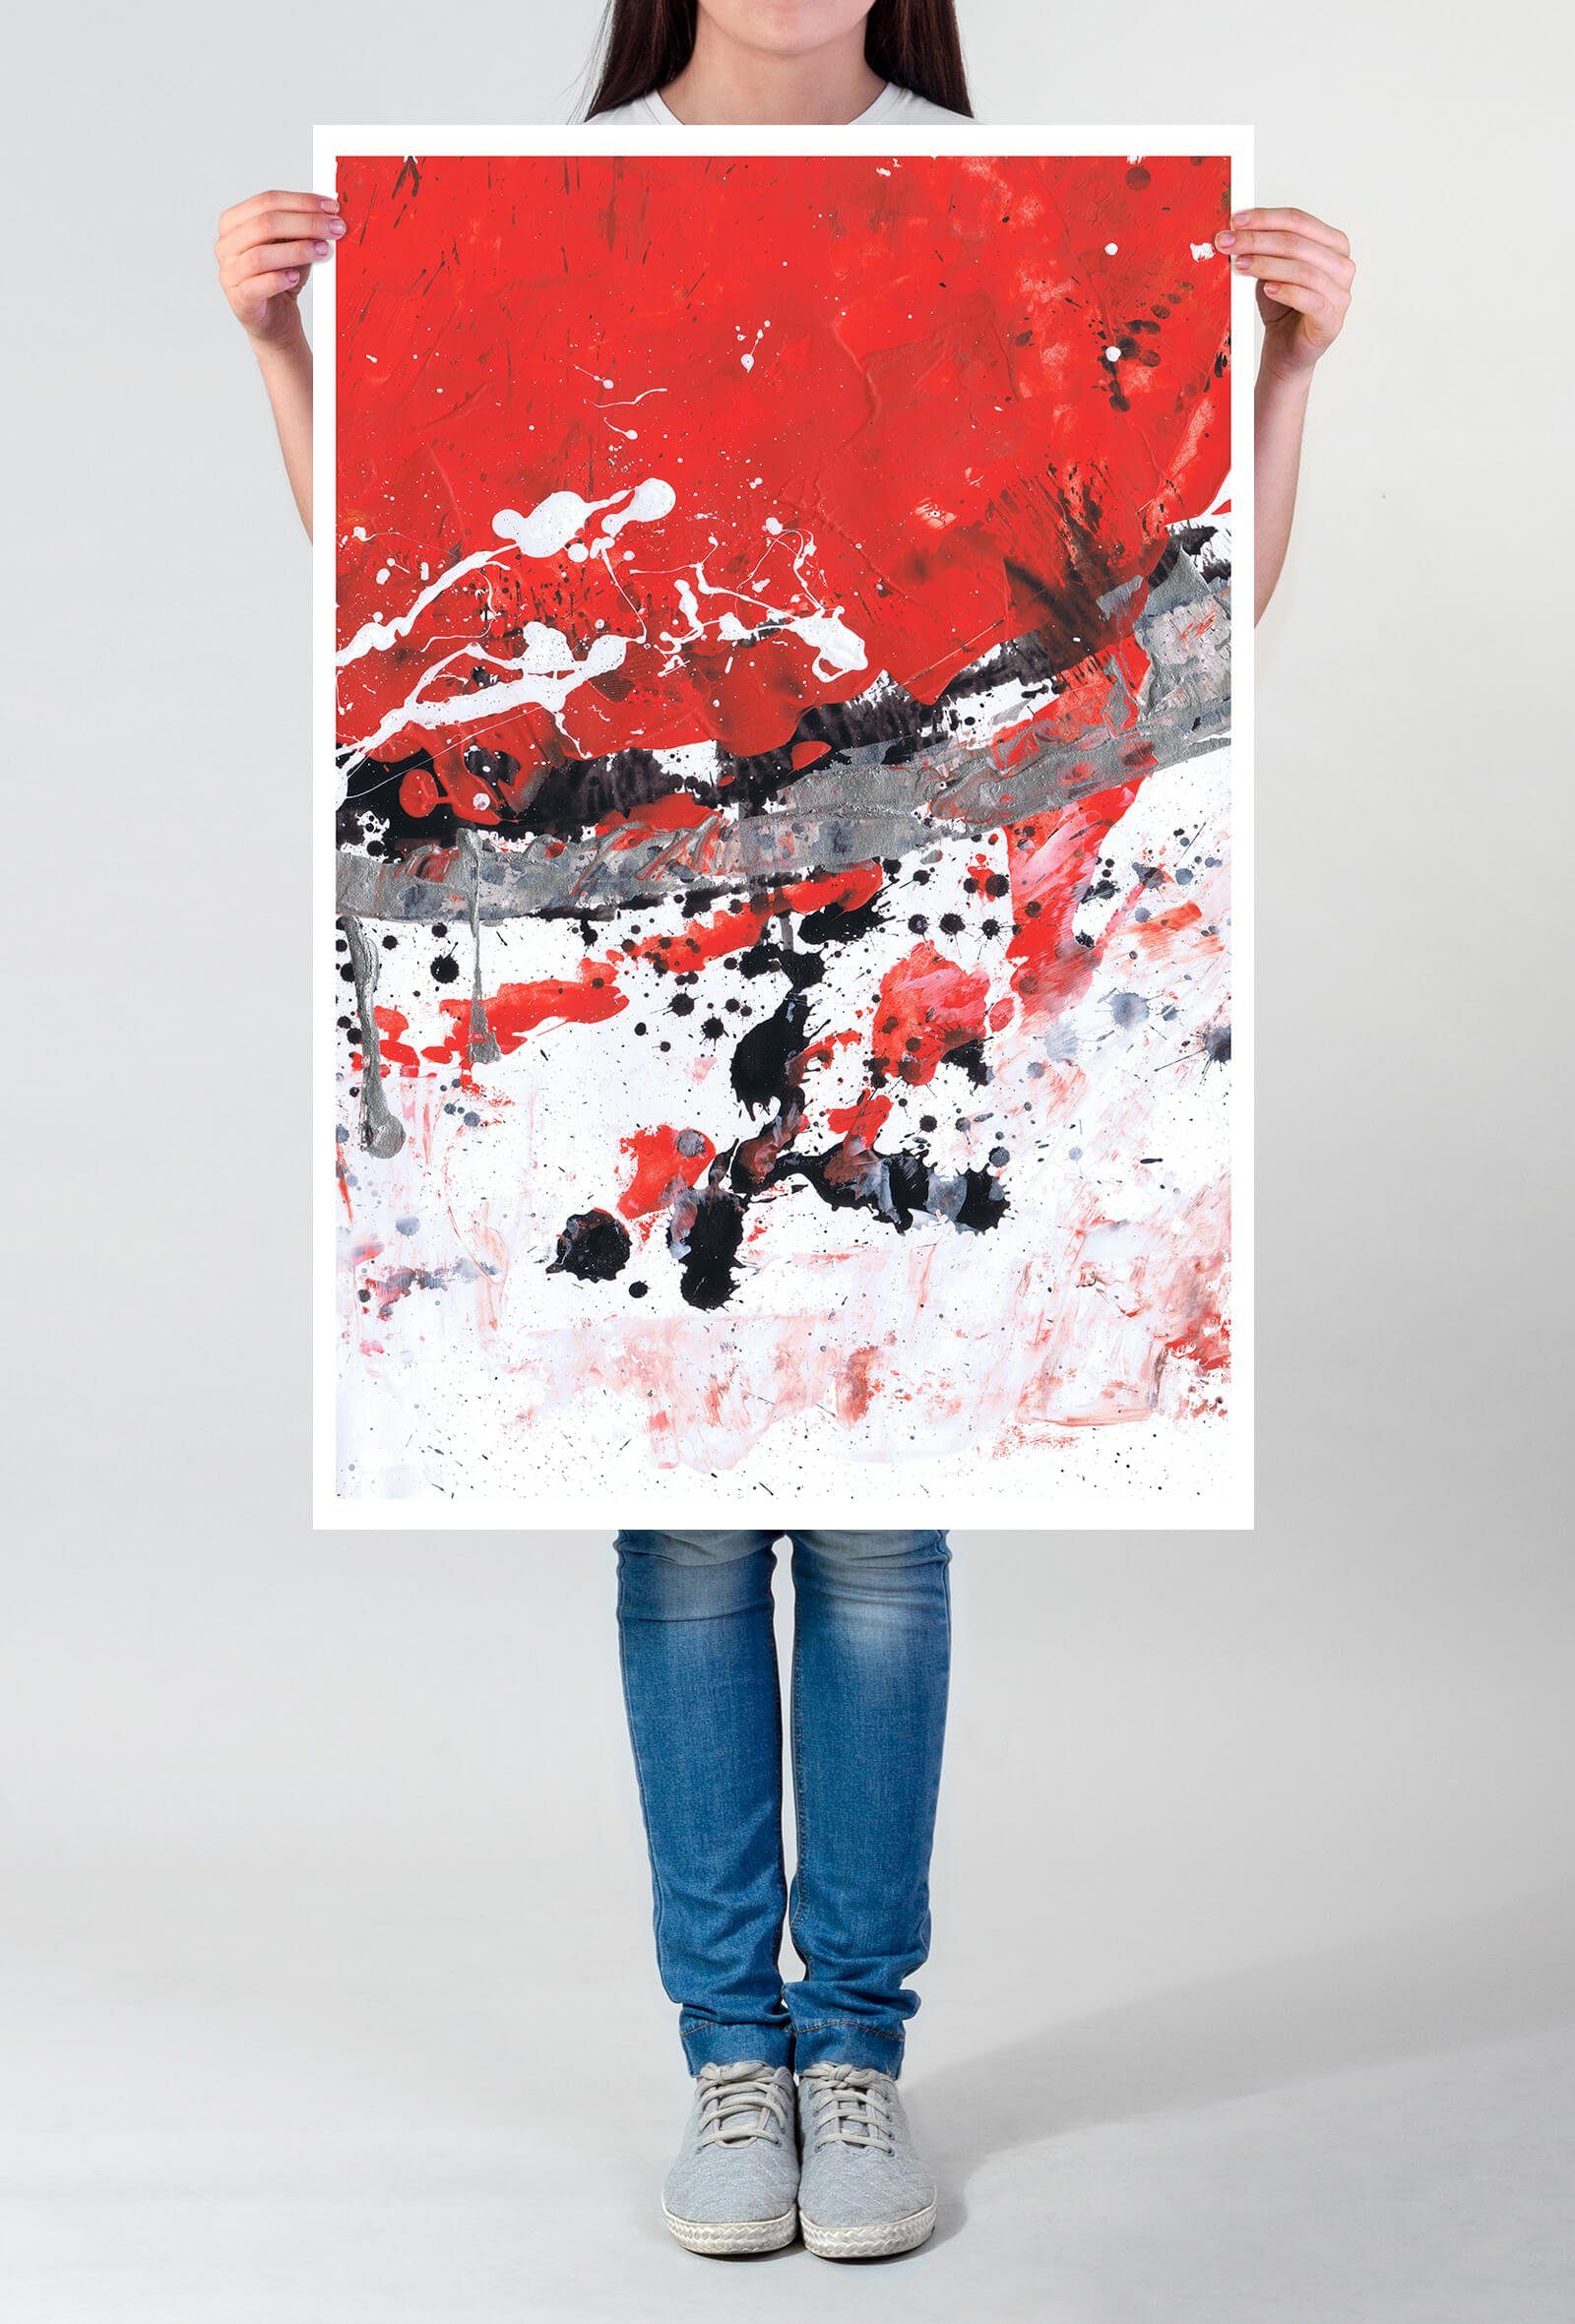 Sinus Art Poster Cherry Oh Baby - Poster 60x90cm